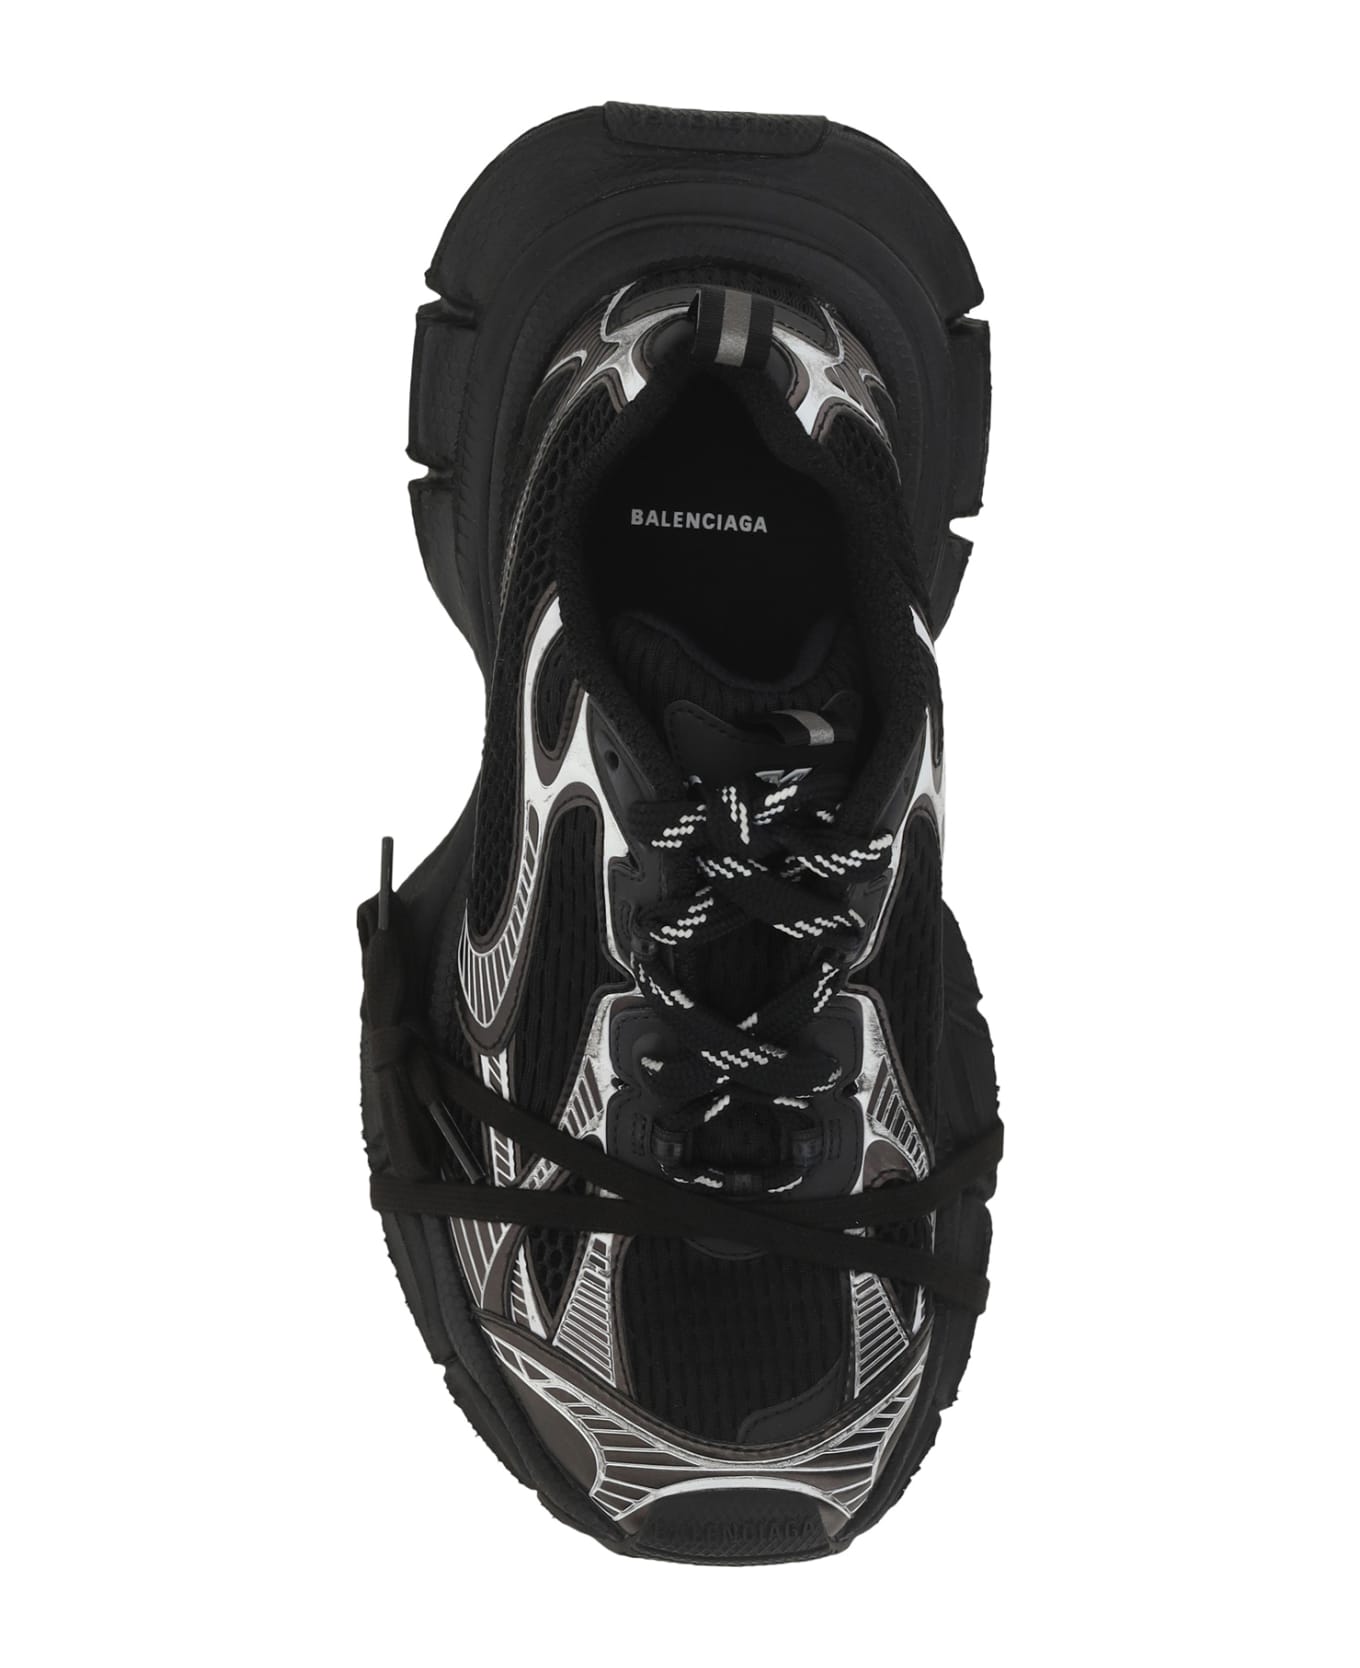 Balenciaga Sneakers - Black/white スニーカー